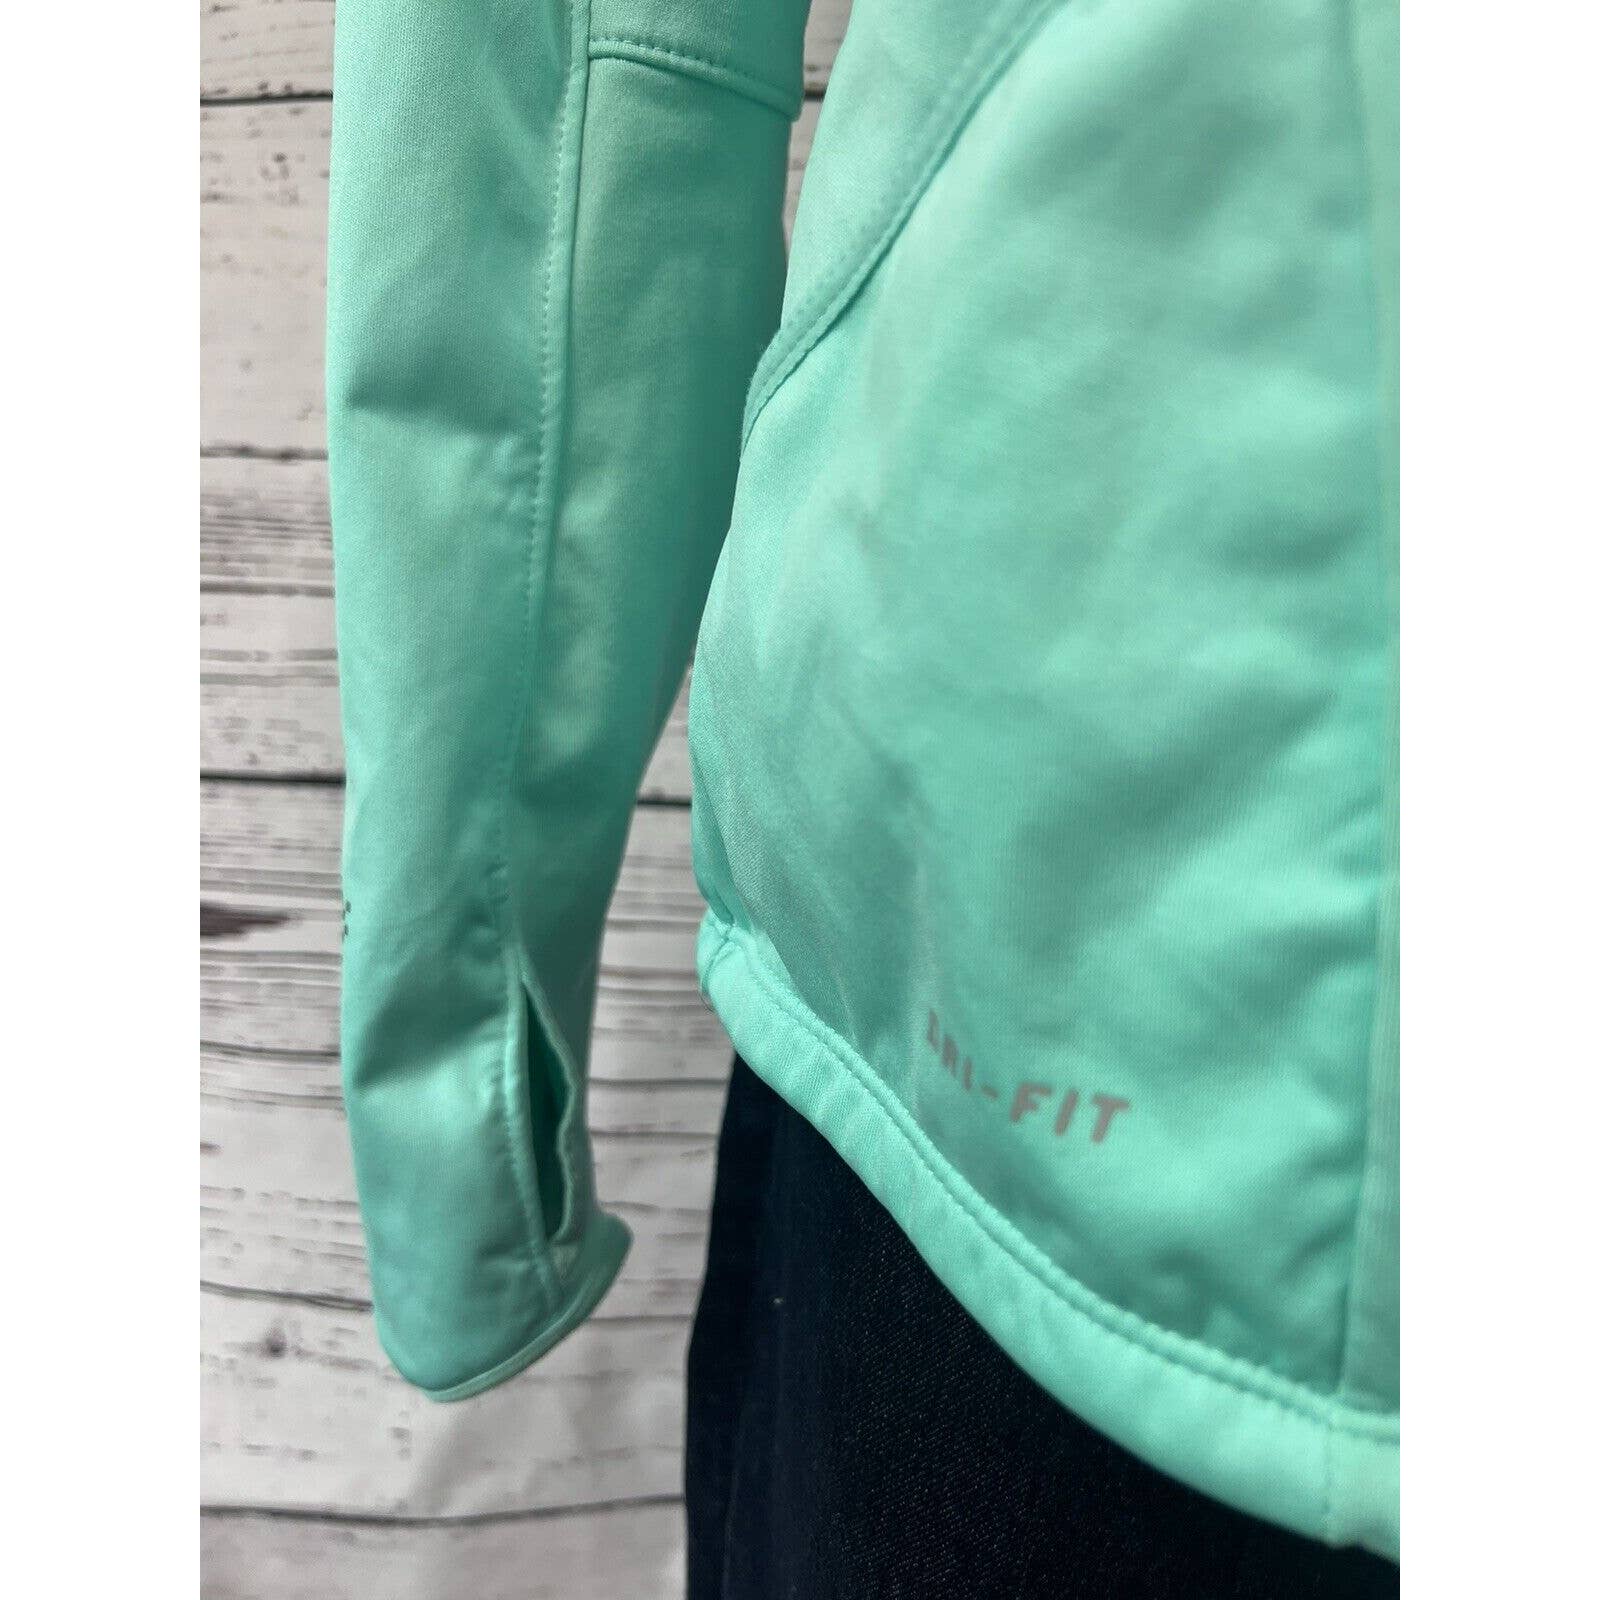 Nike Full Zip Running Jacket Women’s Small Turquoise Green Reflectors Thumb Hole